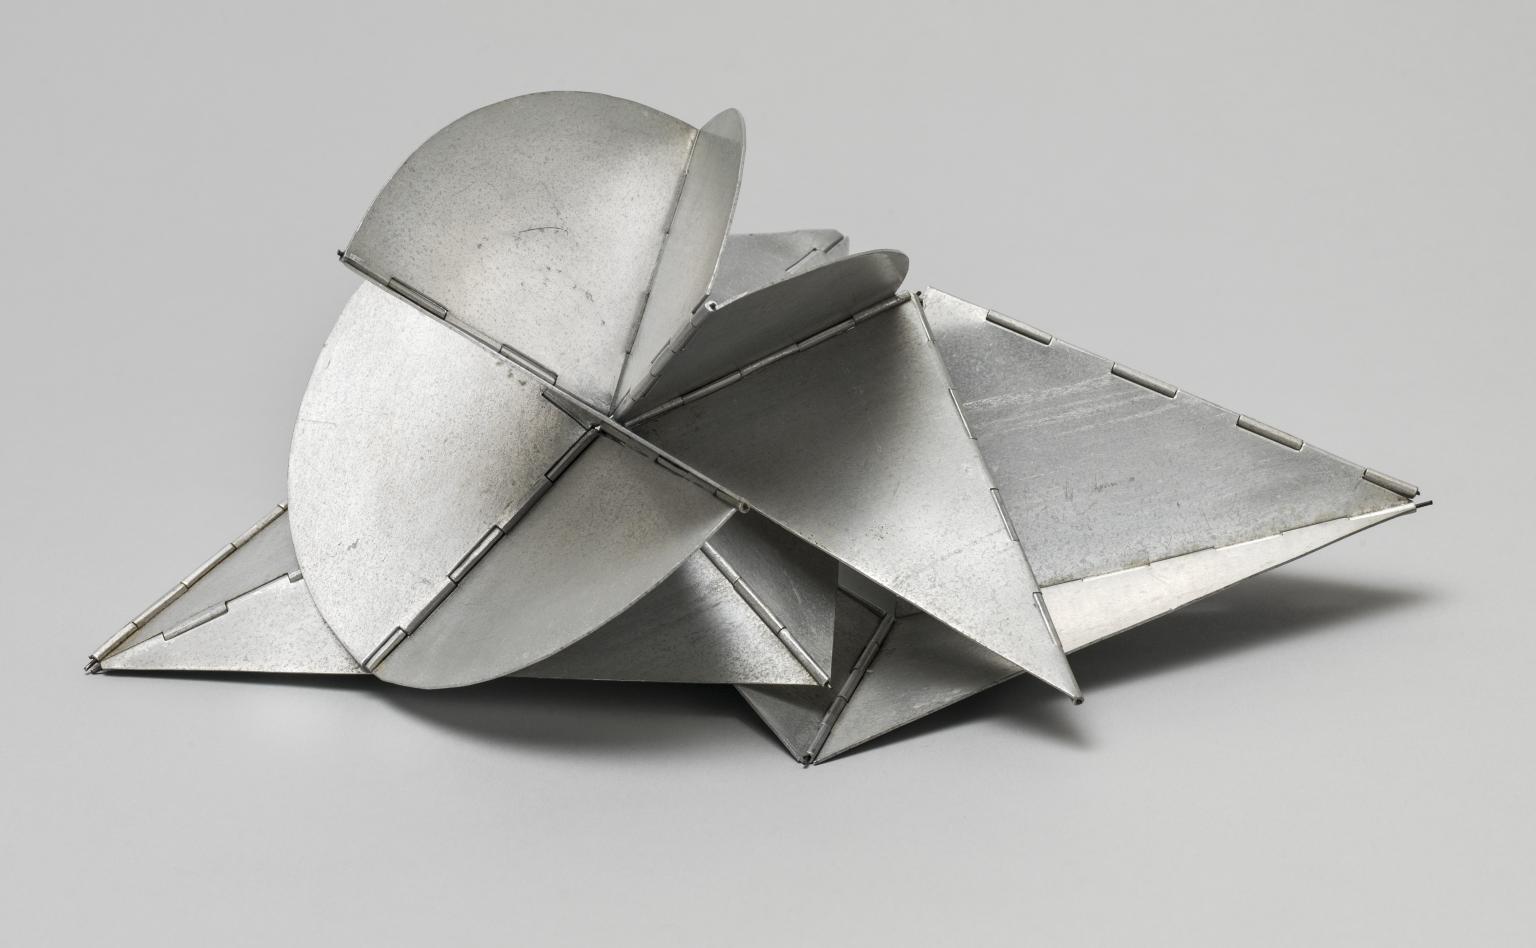 Lygia Clark, Bicho-Maquete (Creature-Maquette) (320), 1964, aluminum (Tate, London)